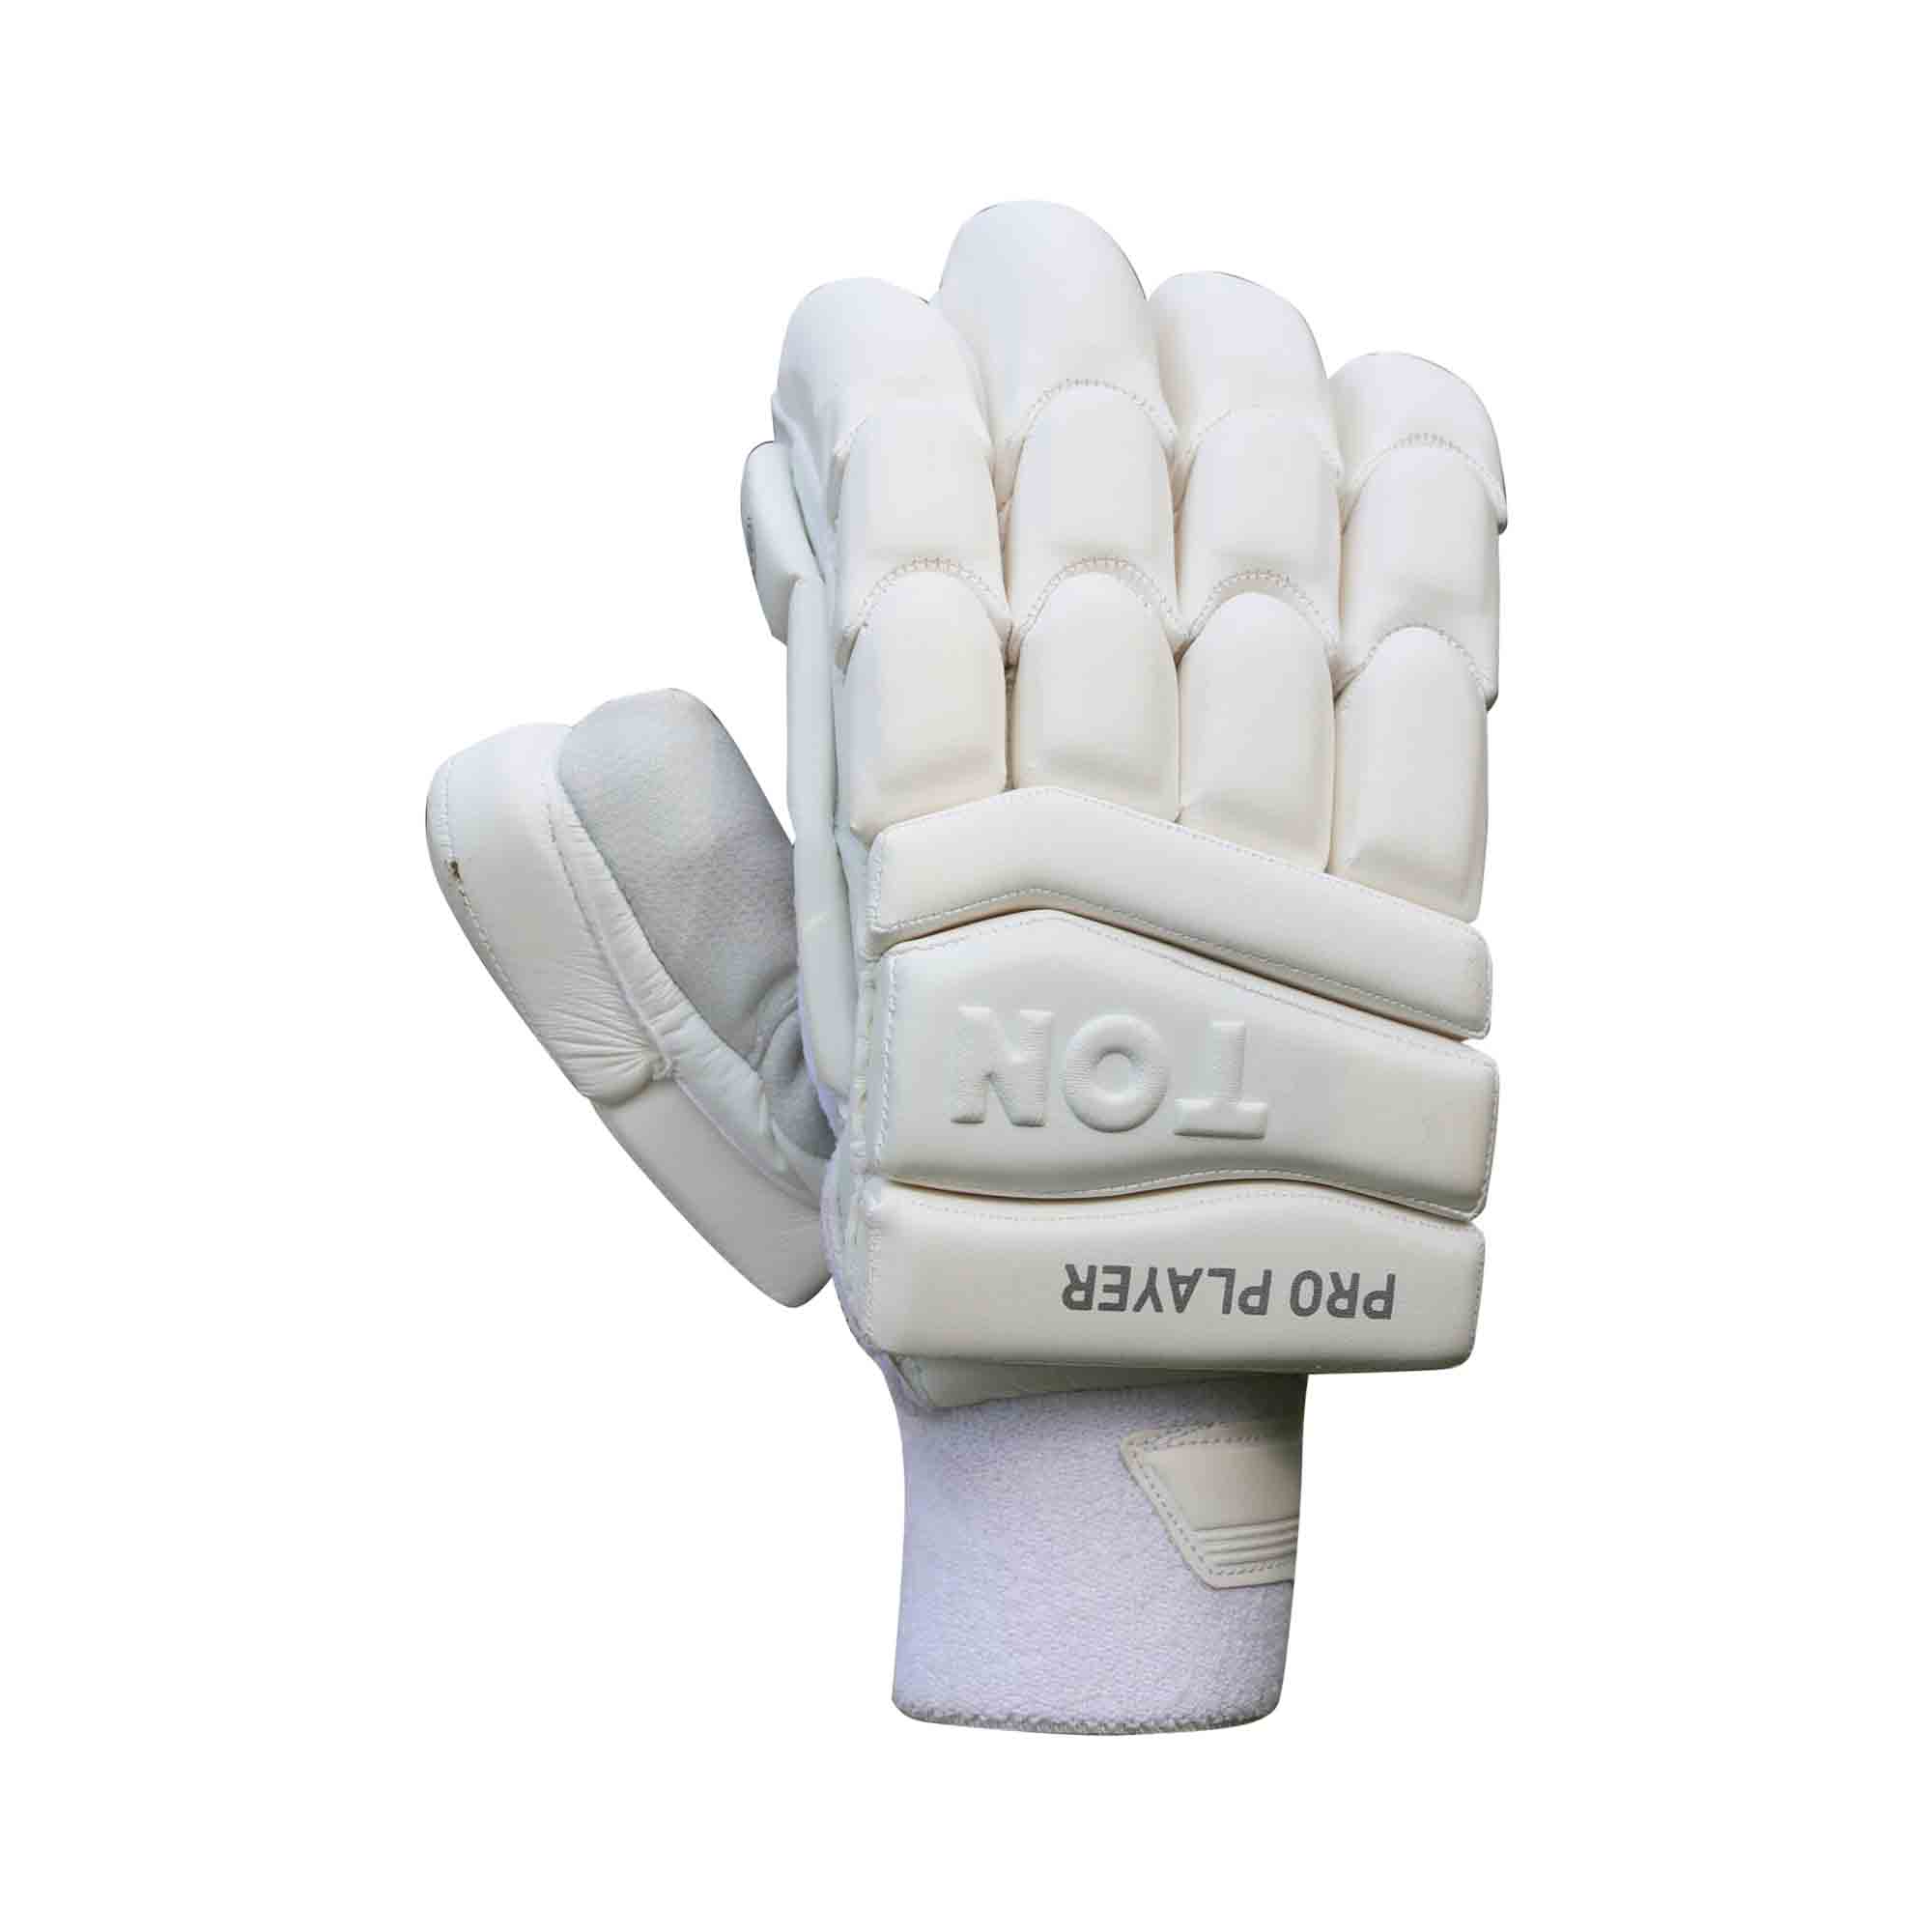 SS TON Pro Players Cricket Batting Gloves